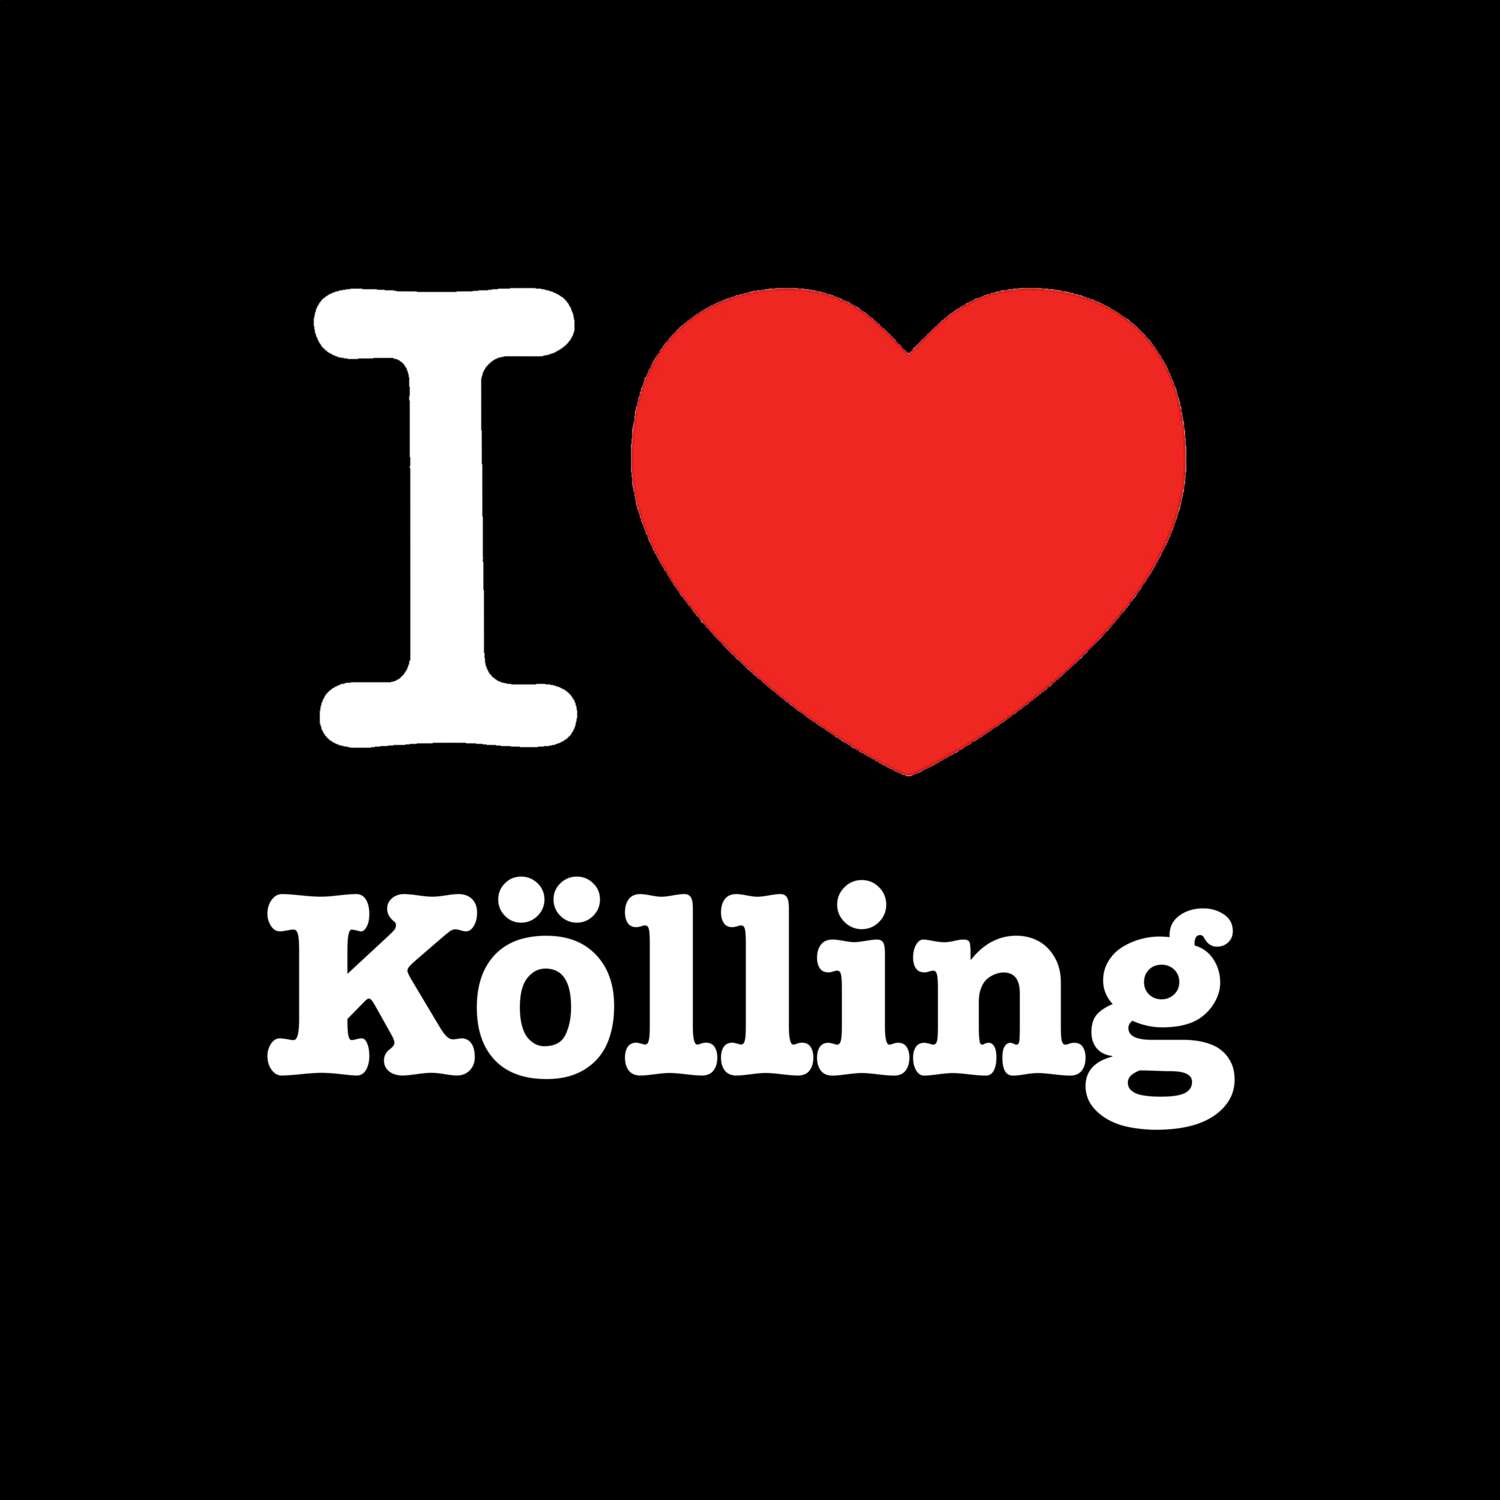 Kölling T-Shirt »I love«